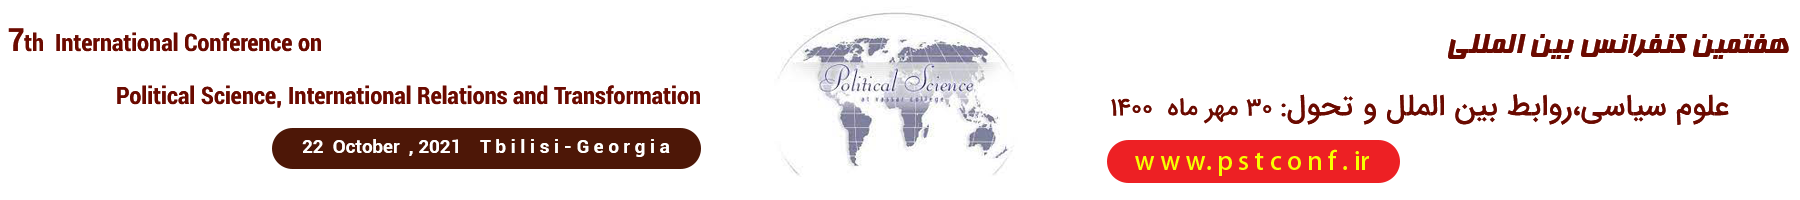 کنفرانس بین المللی علوم سیاسی،روابط بین الملل و تحول